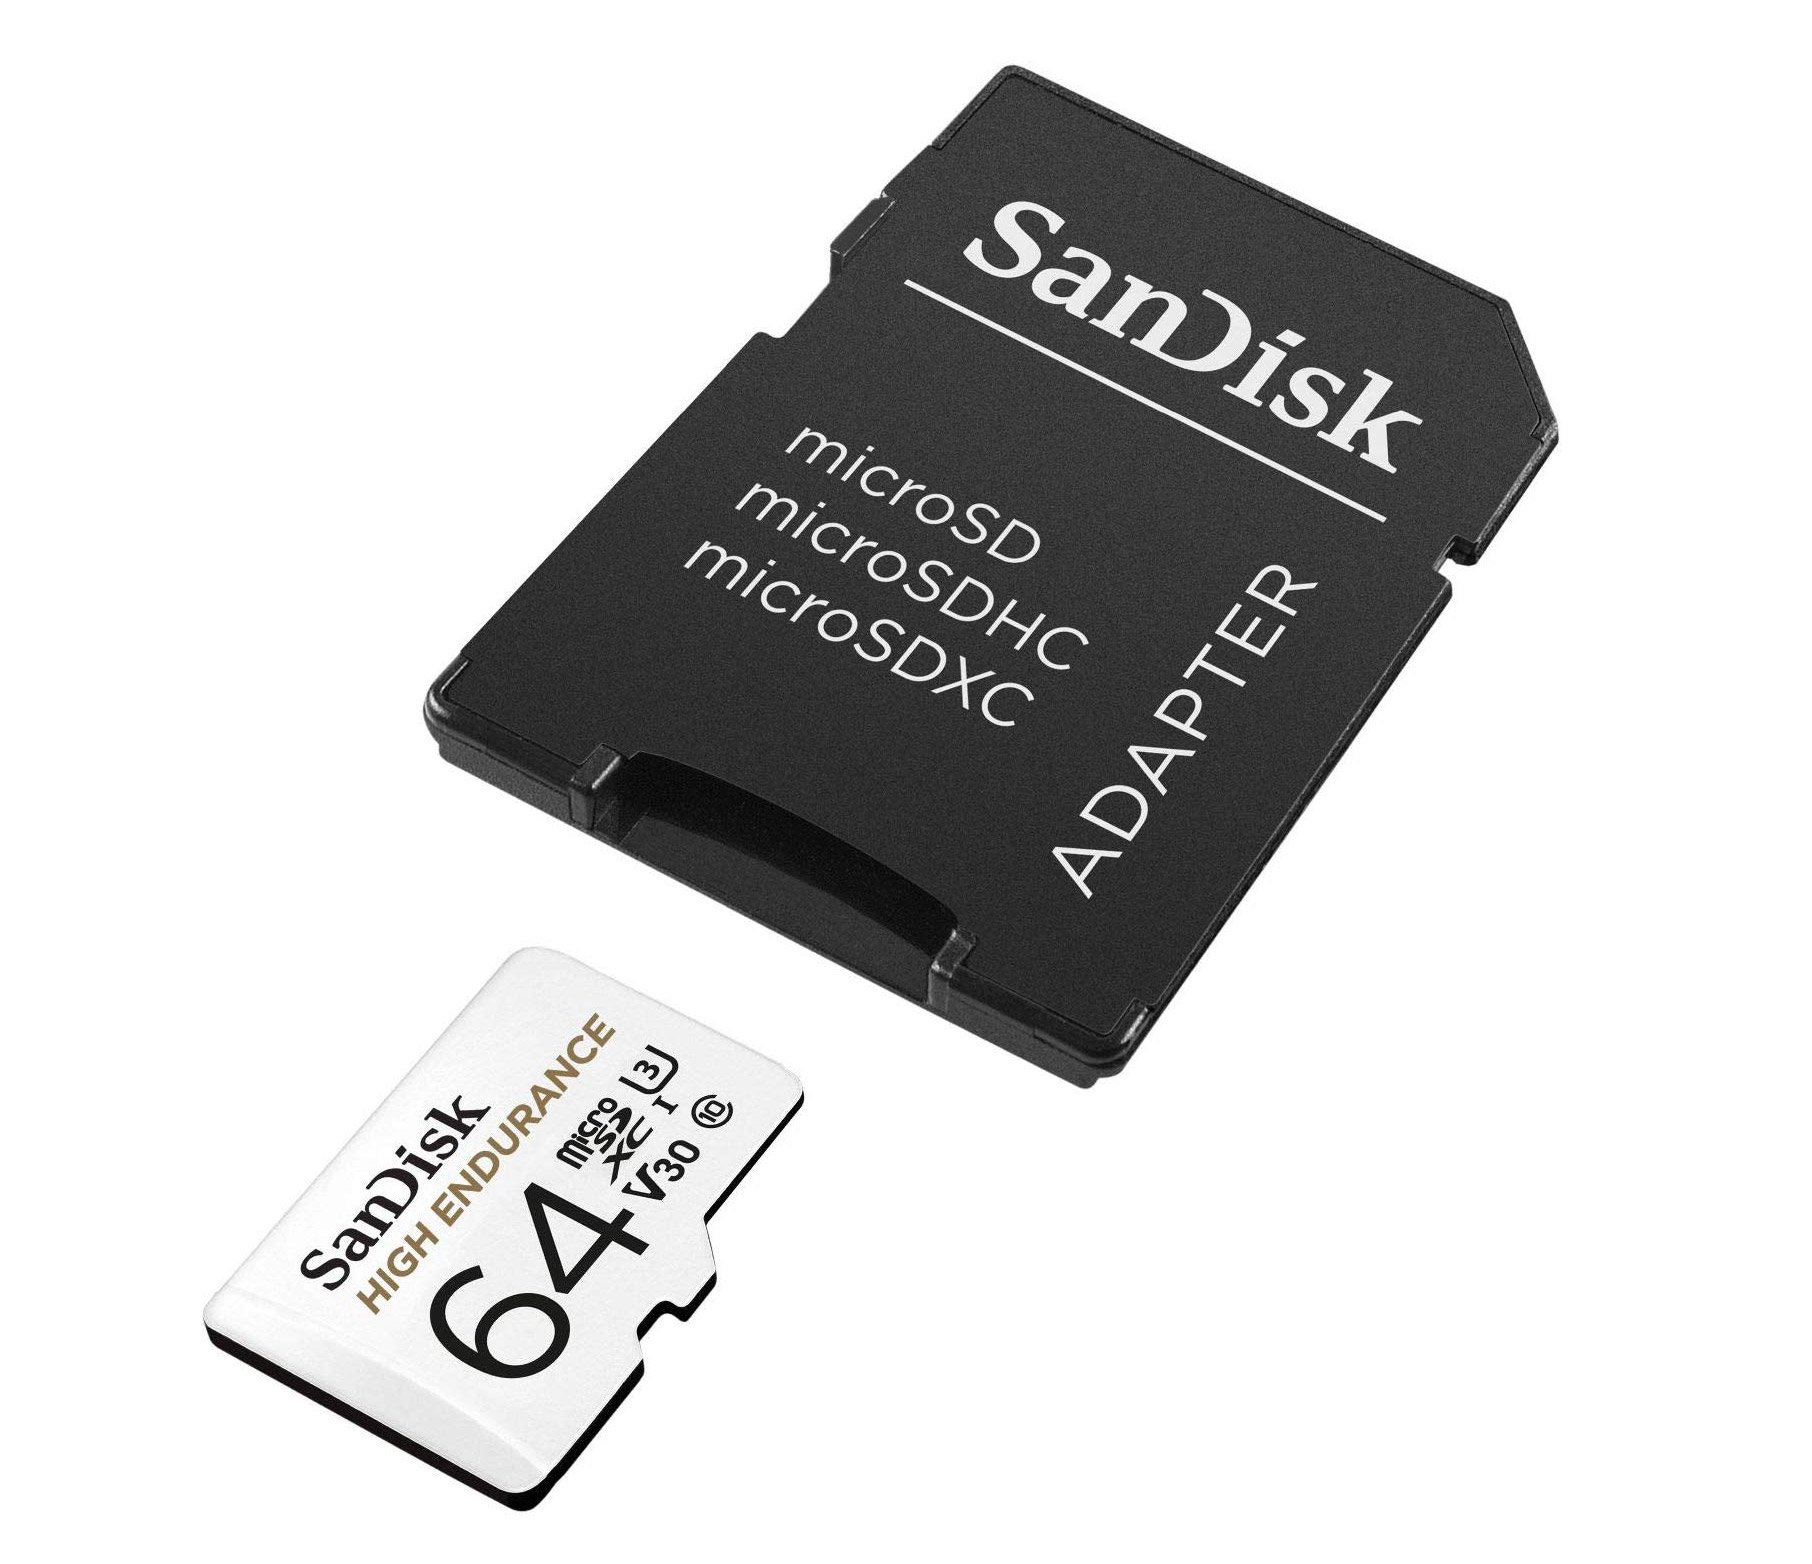 SanDisk High Endurance MicroSDHC Class 10 64GB